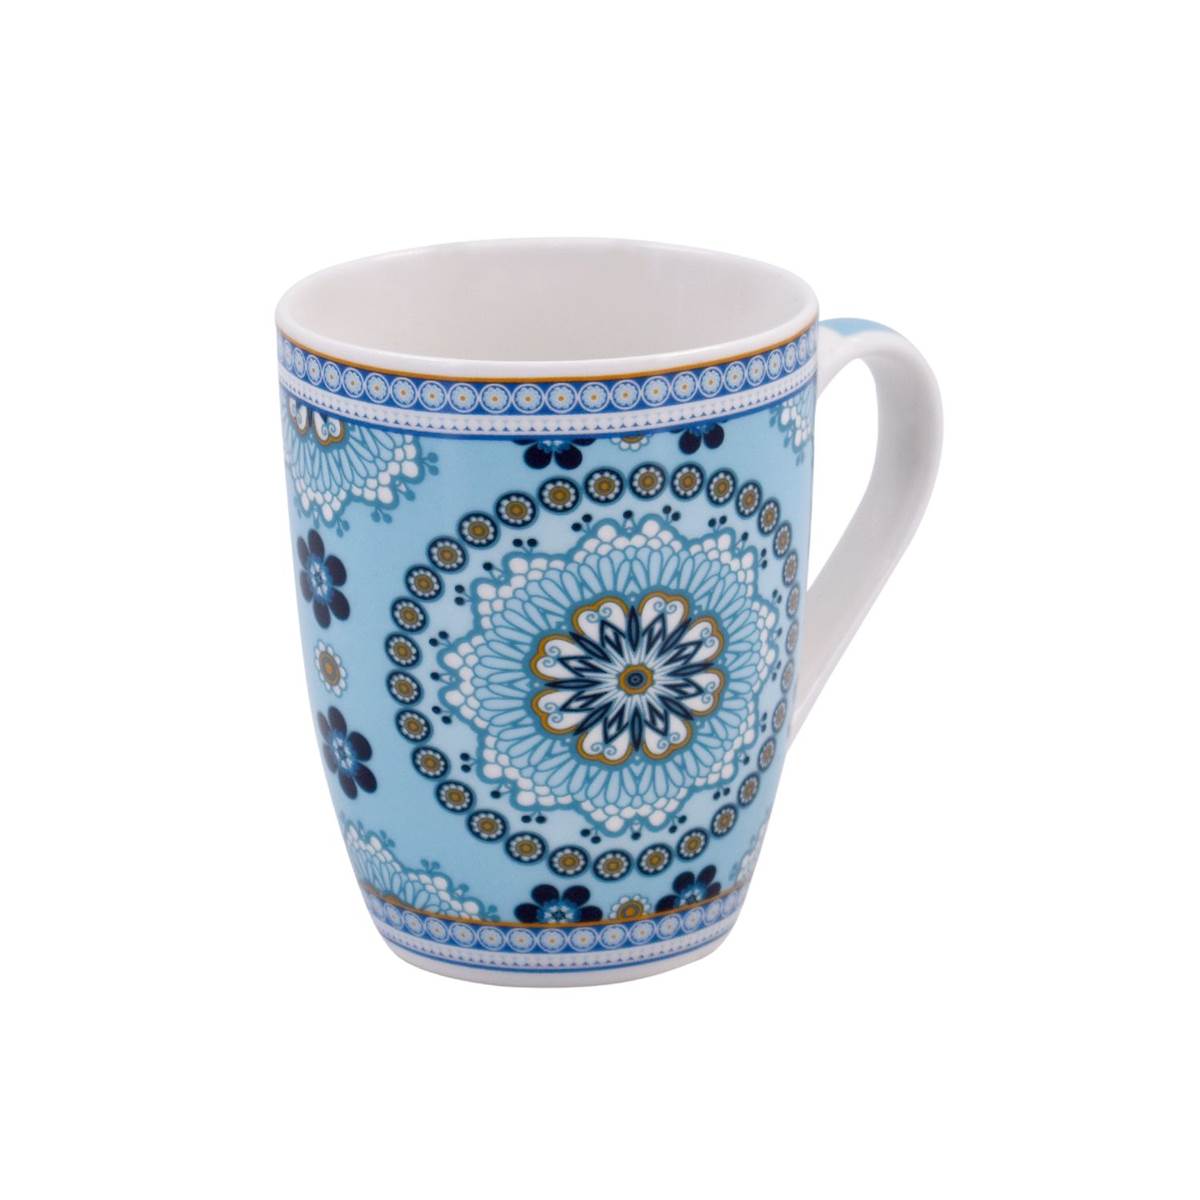 Printed Ceramic Coffee or Tea Mug with handle - 325ml (4129G-A)